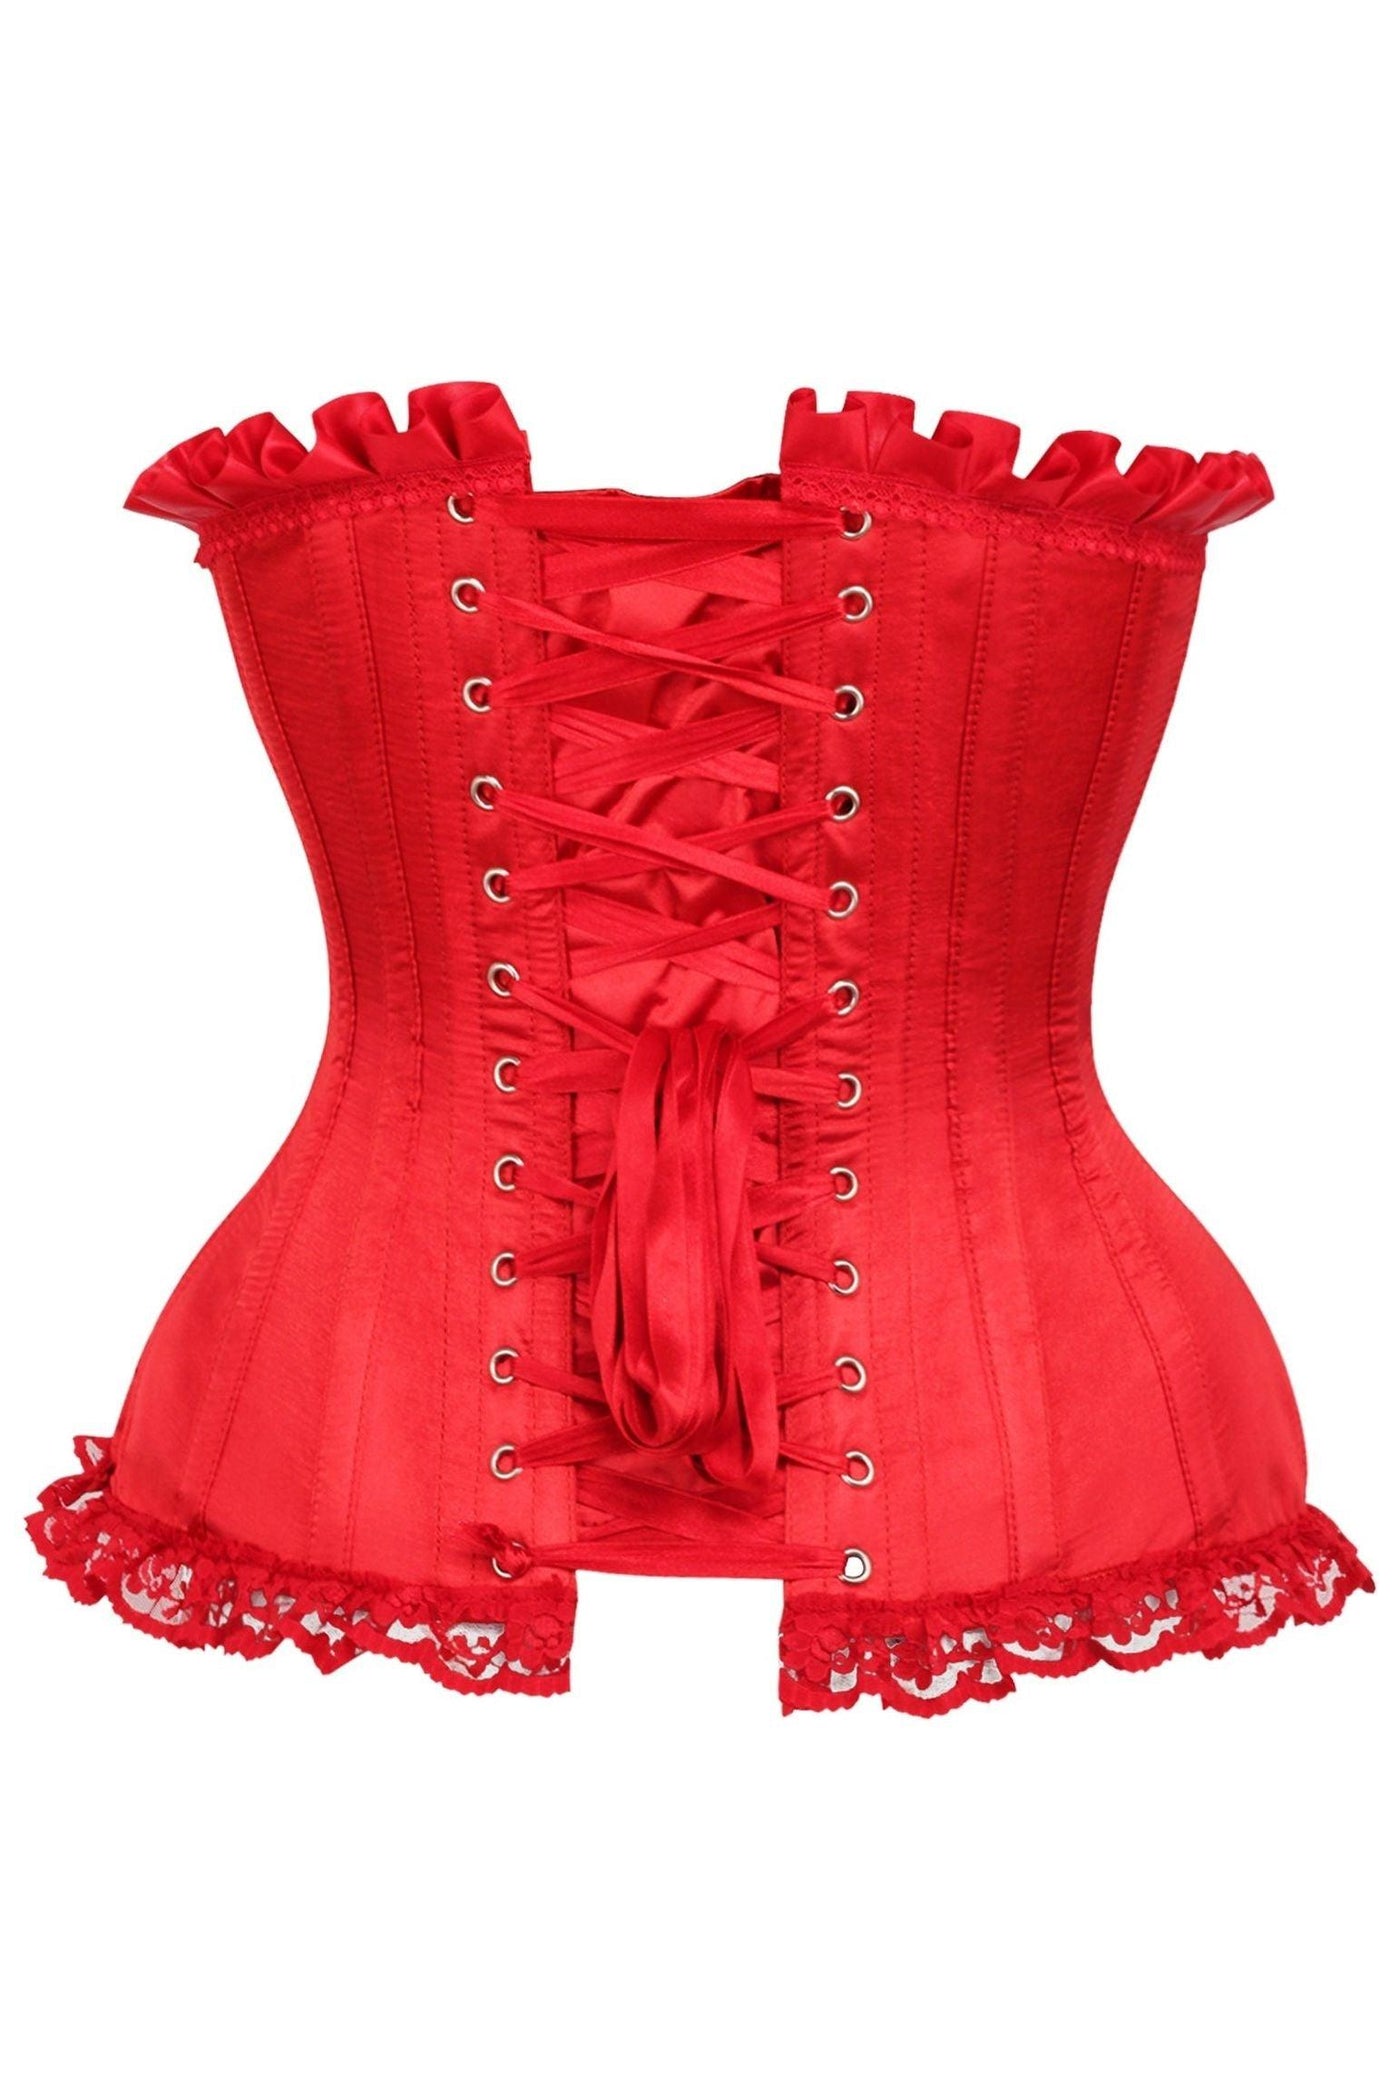 Top Drawer Red Satin Steel Boned Burlesque Corset - AMIClubwear